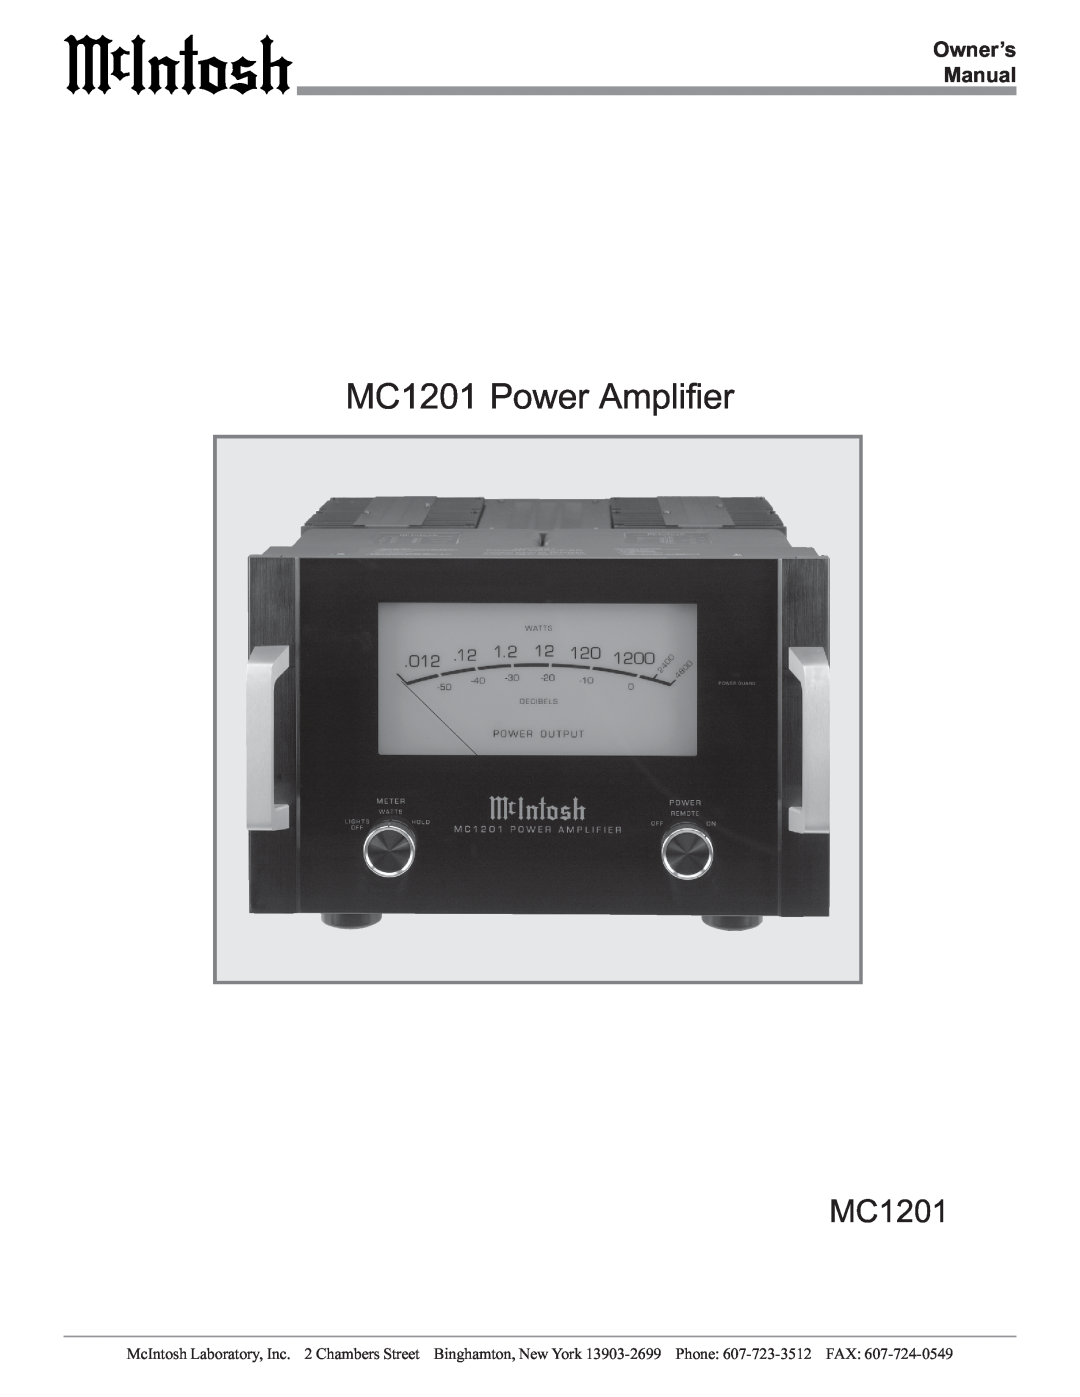 McIntosh manual MC1201 Power Amplifier 